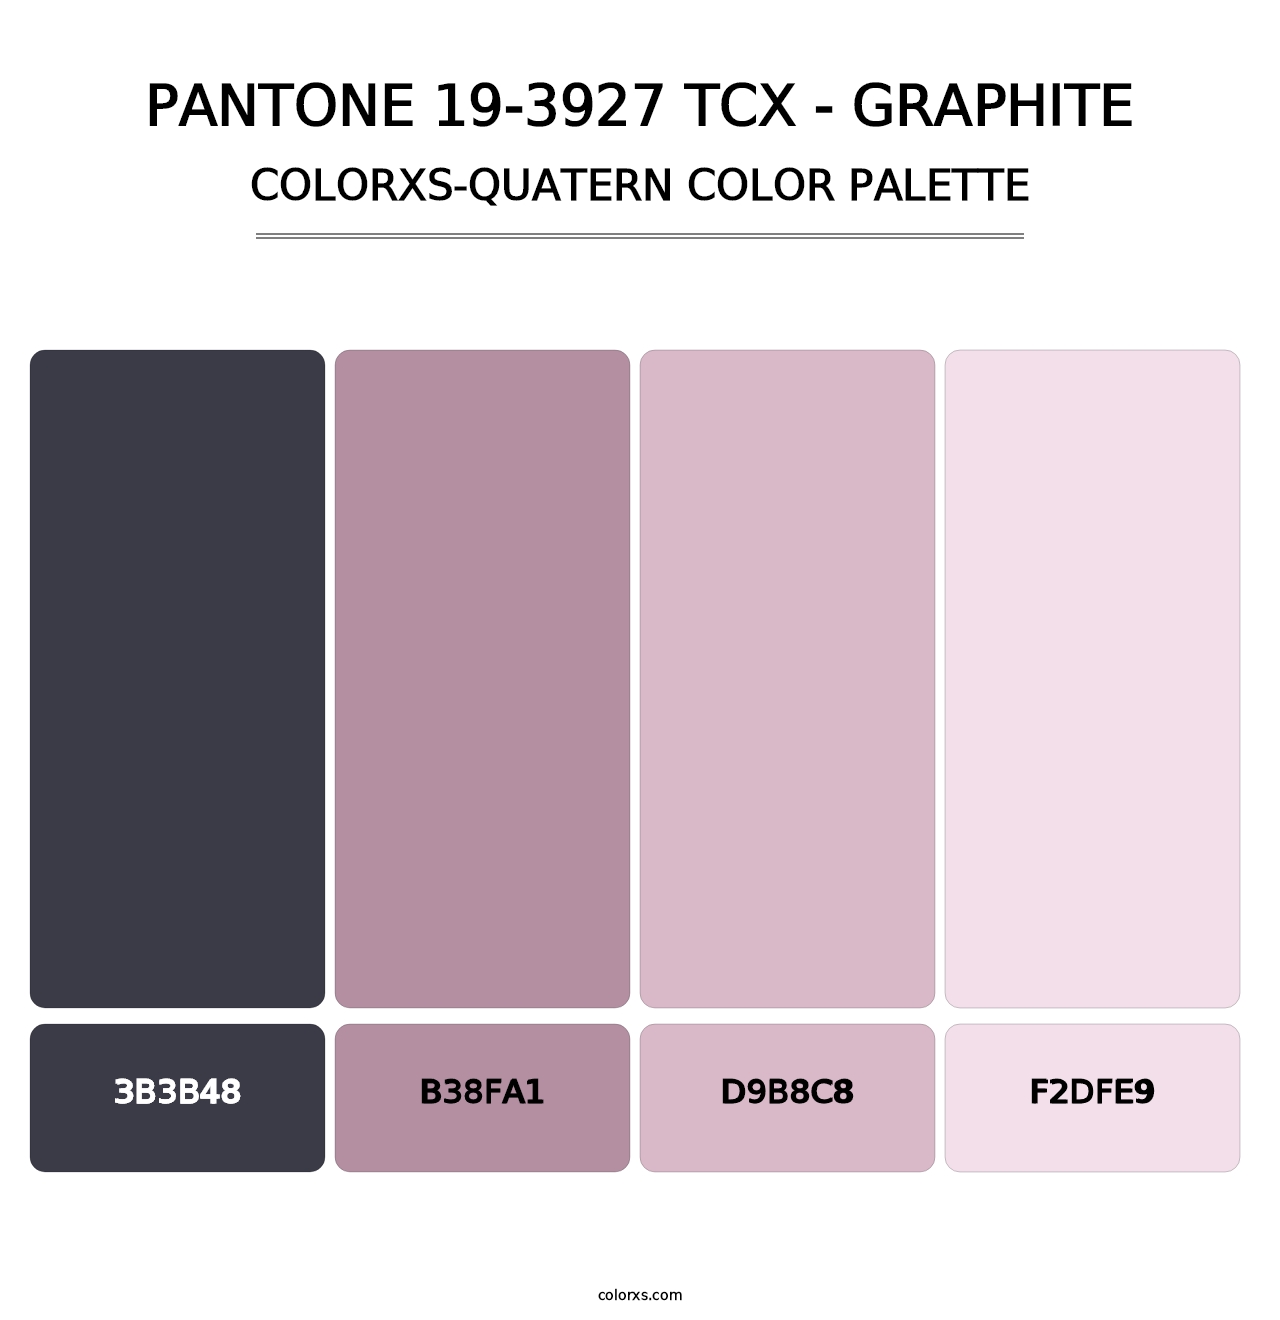 PANTONE 19-3927 TCX - Graphite - Colorxs Quatern Palette